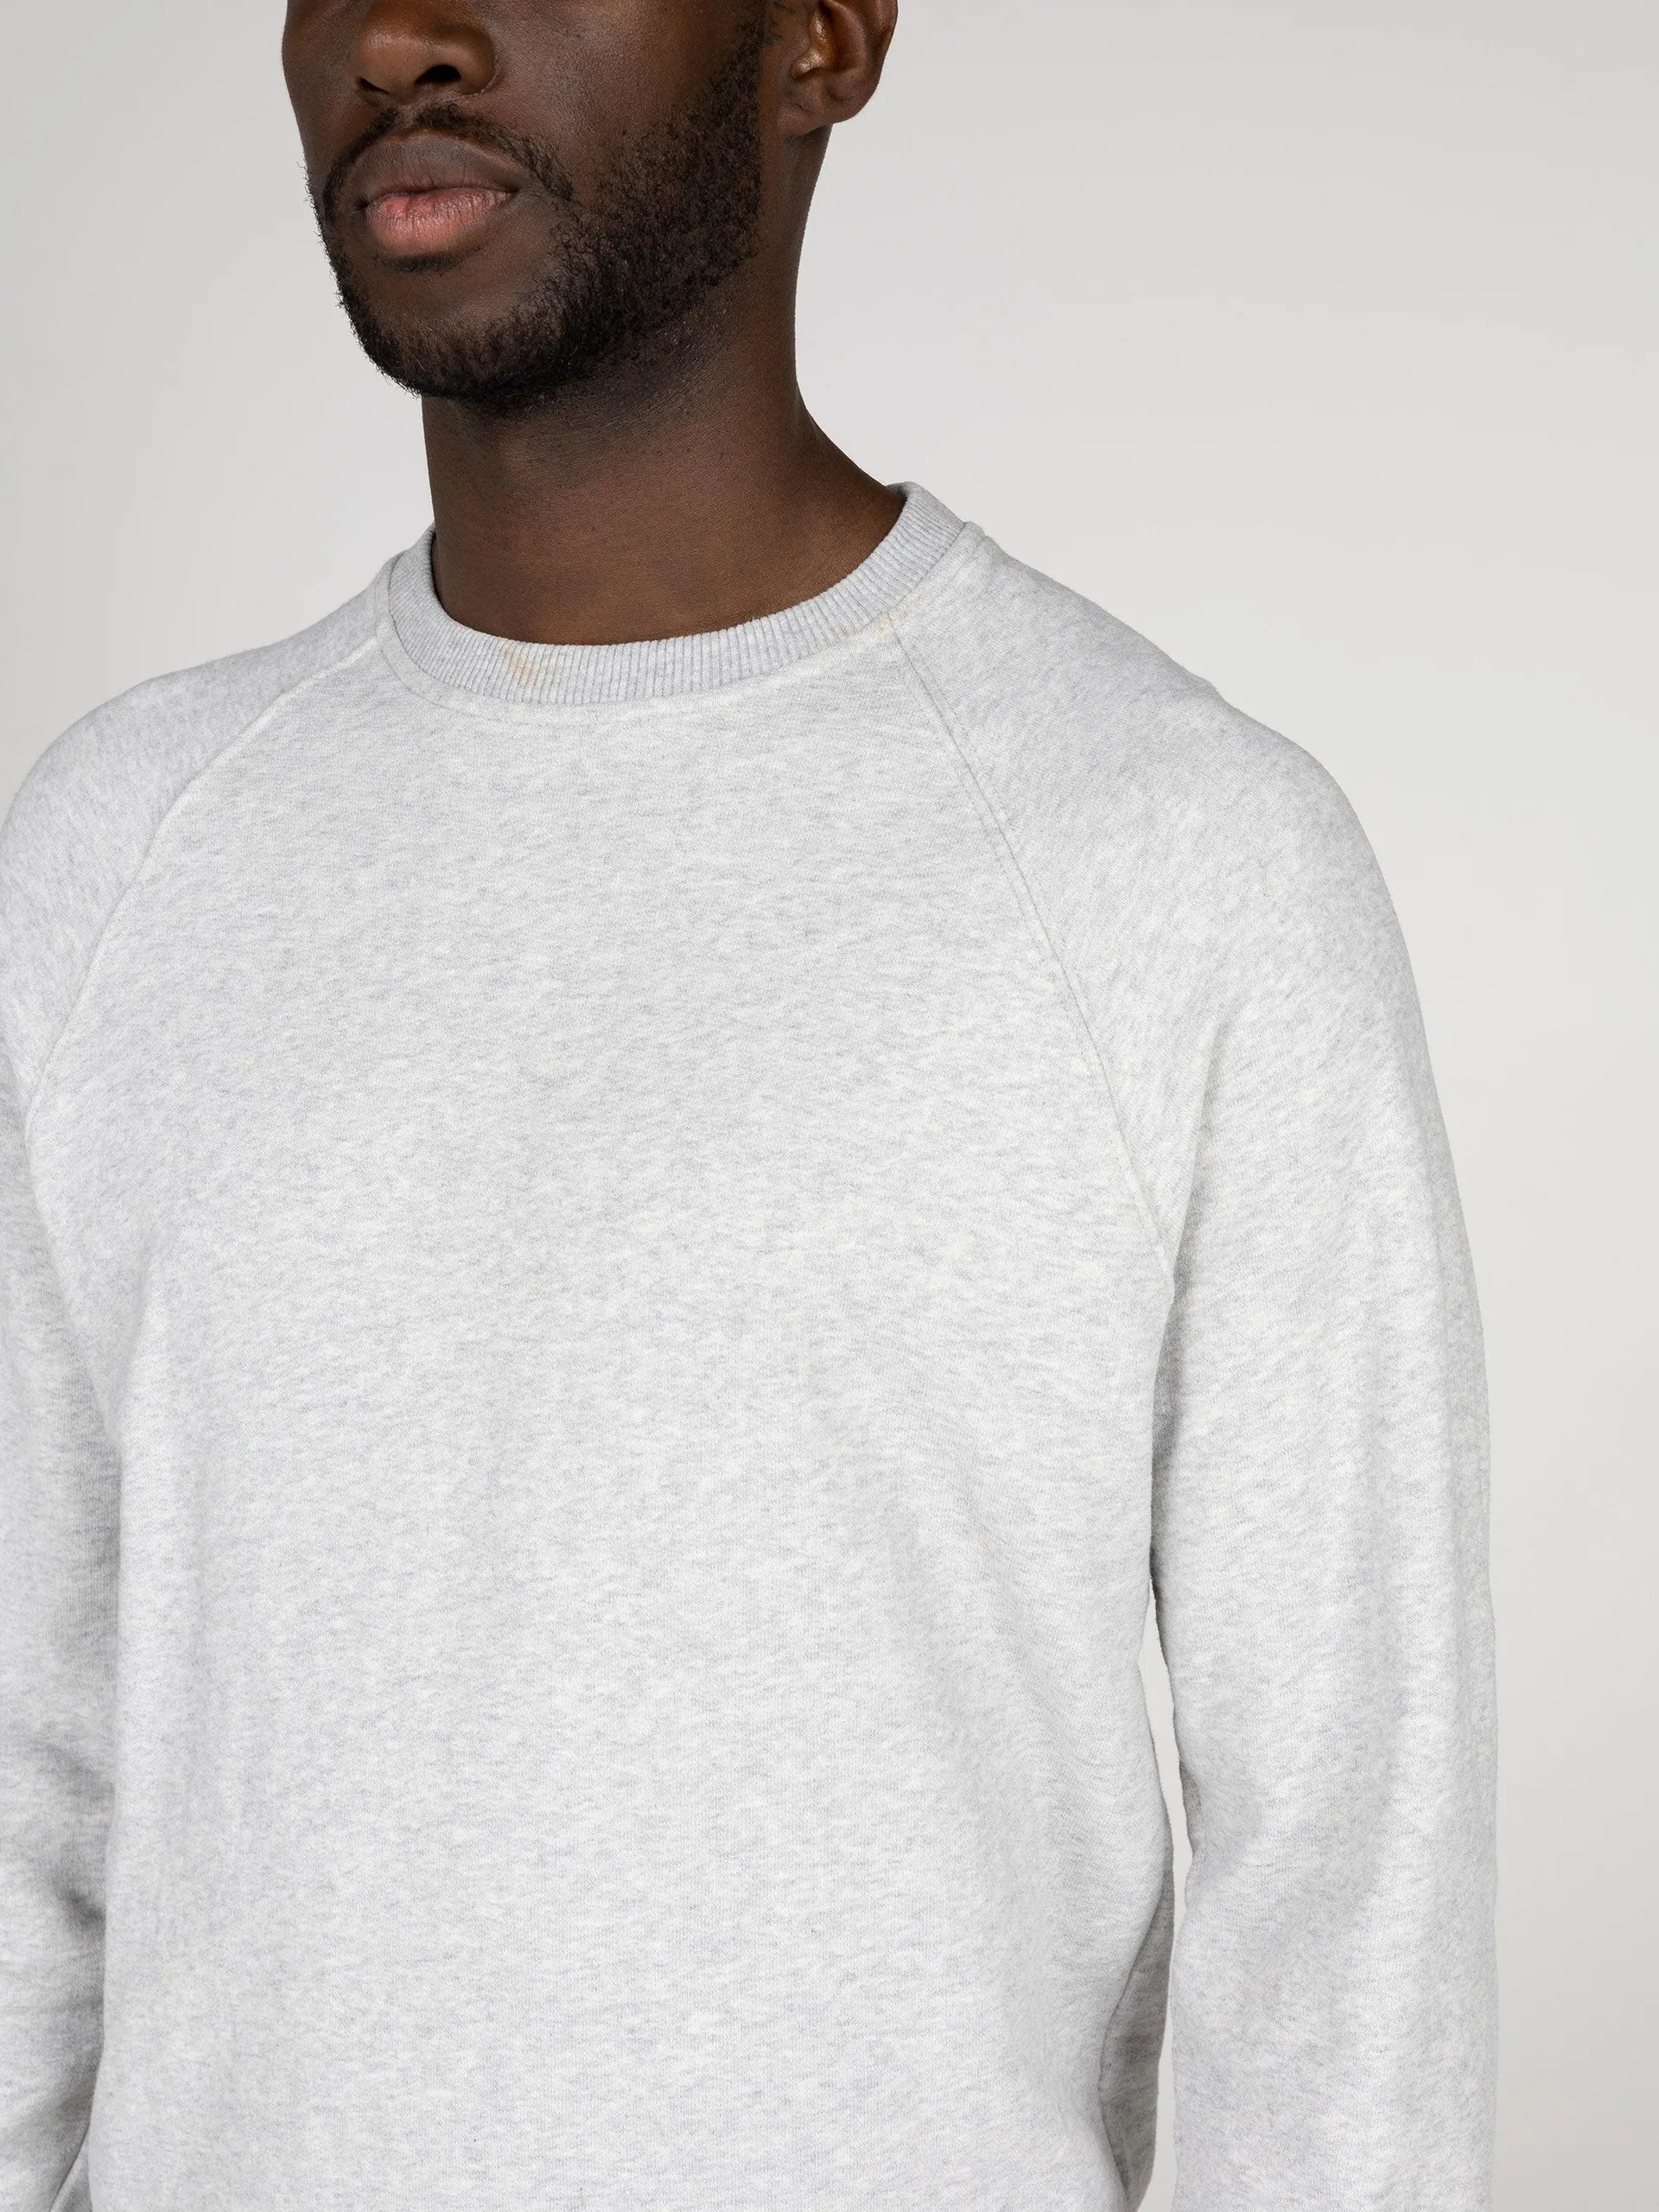 Organic cotton sweatshirt in grey marl